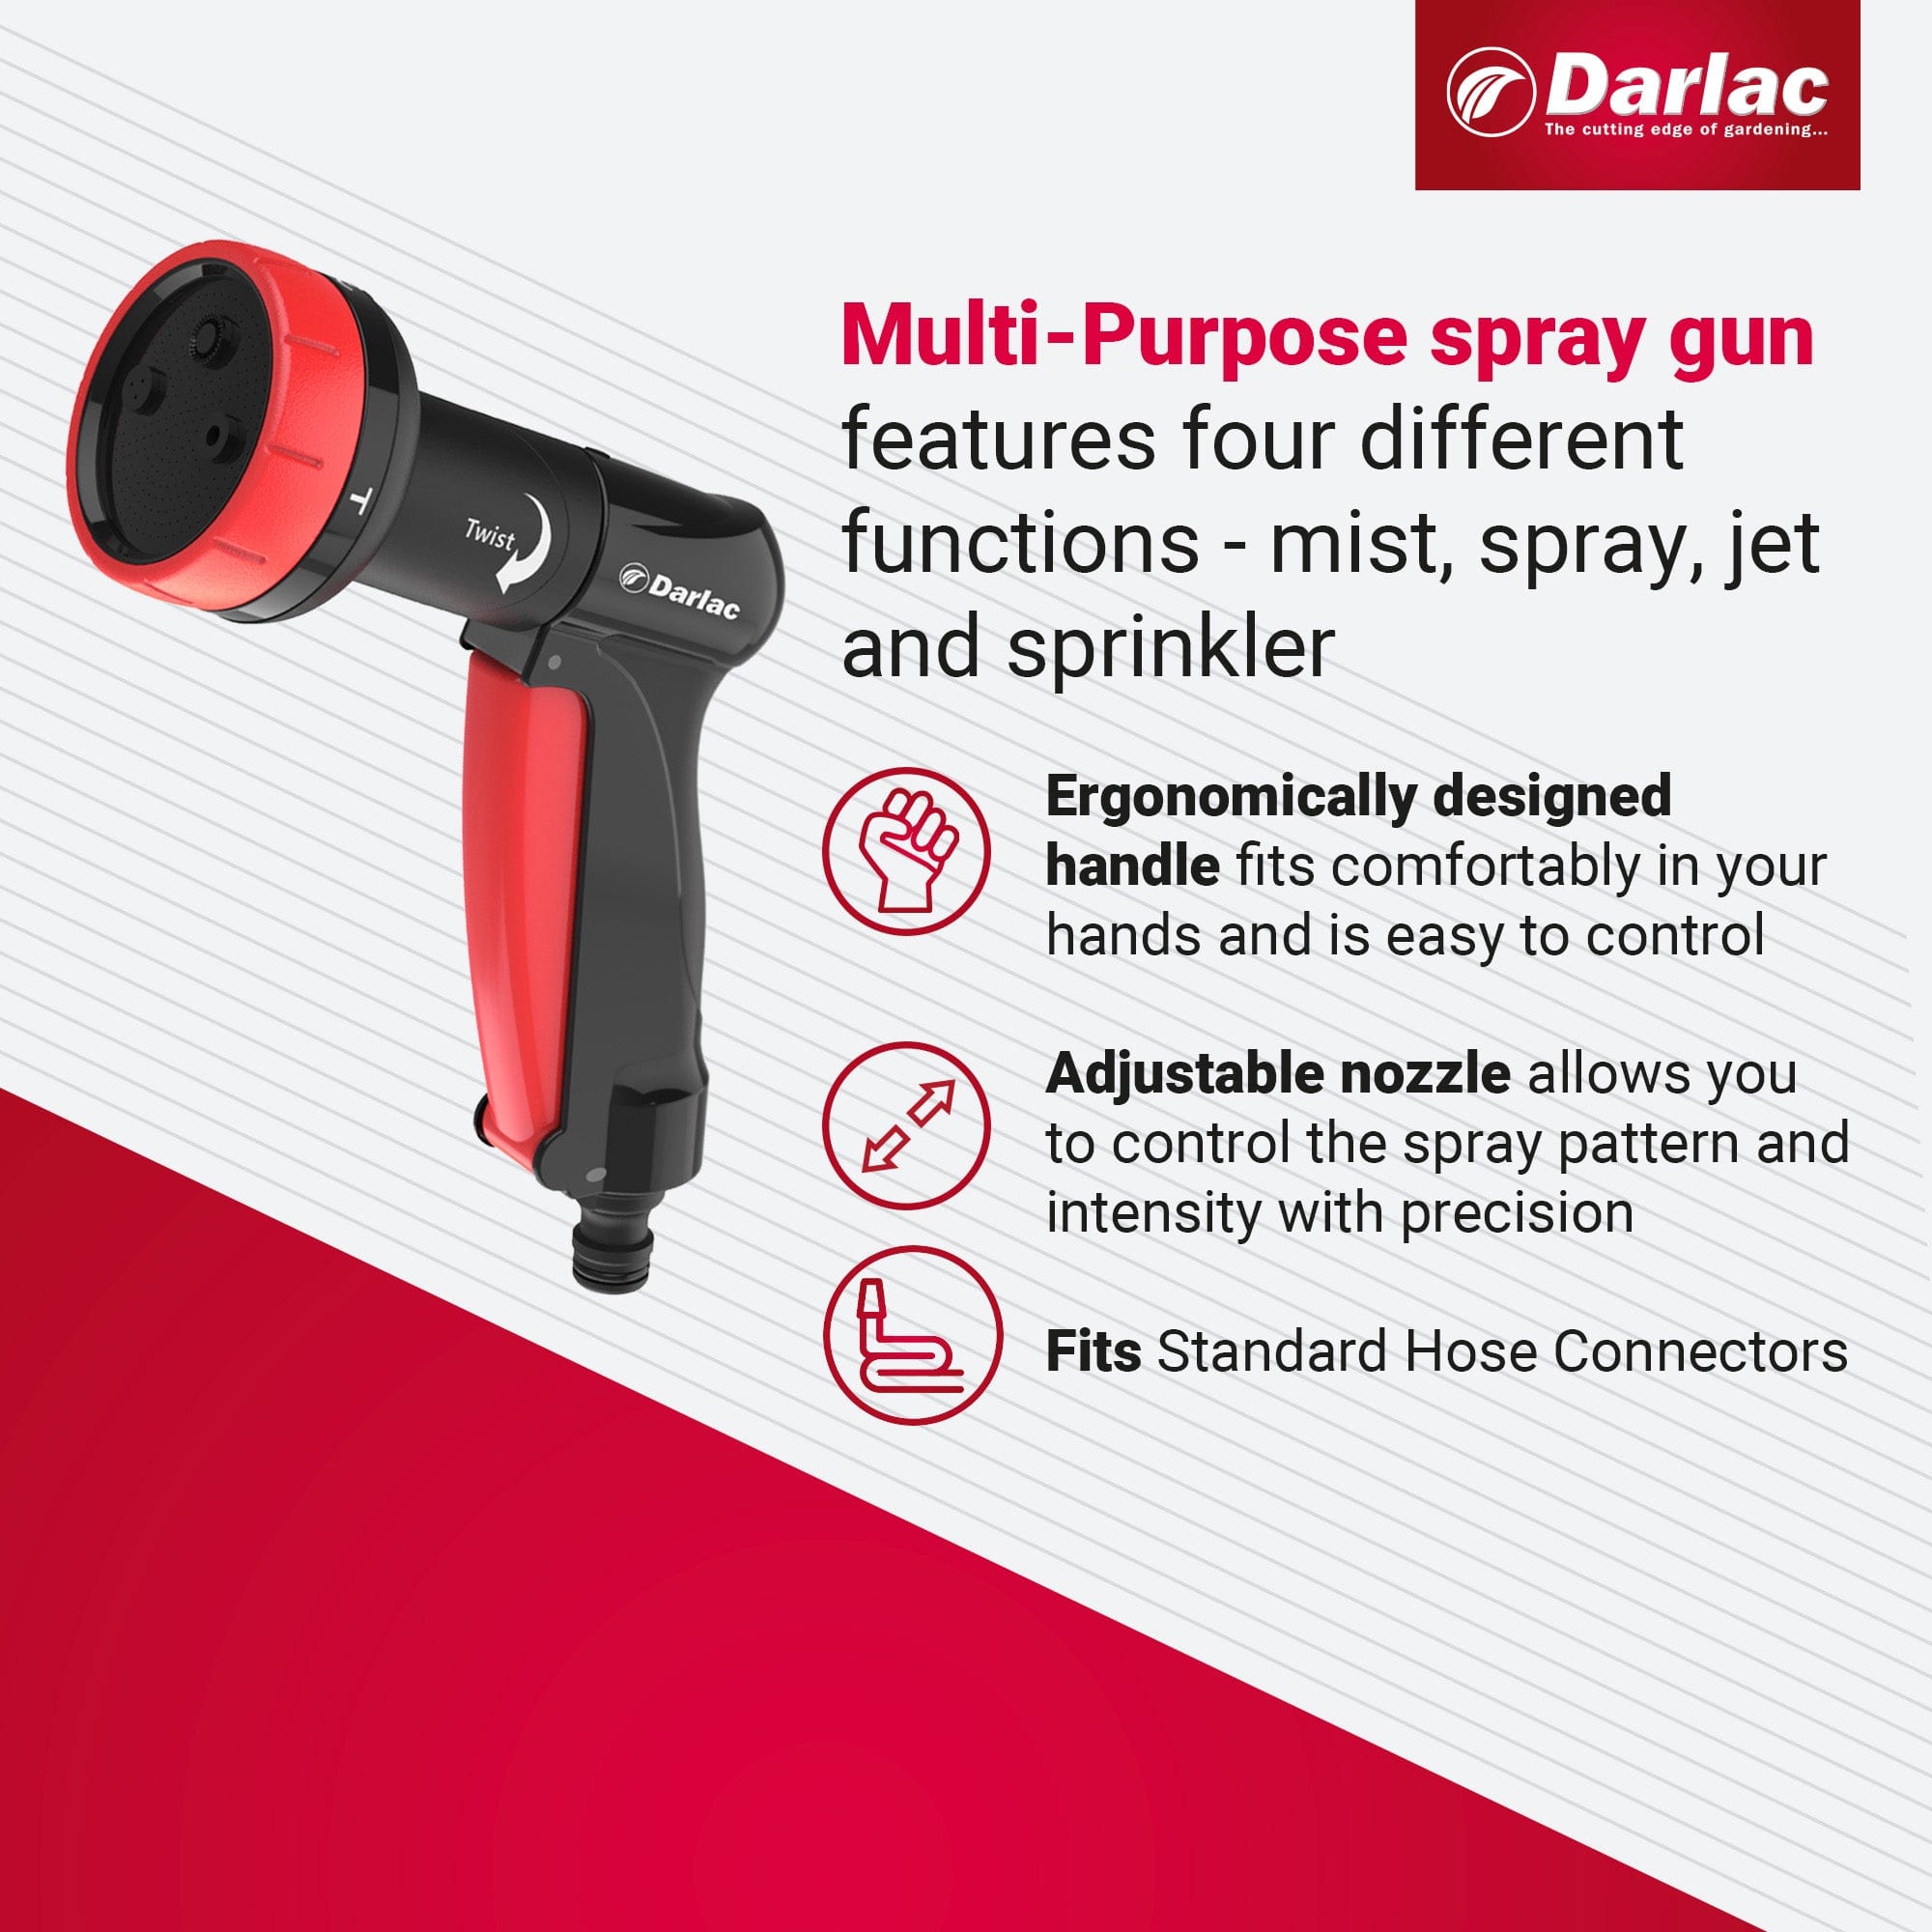 dt-brown HARDWARE Darlac Twister Multi Purpose Spray Gun